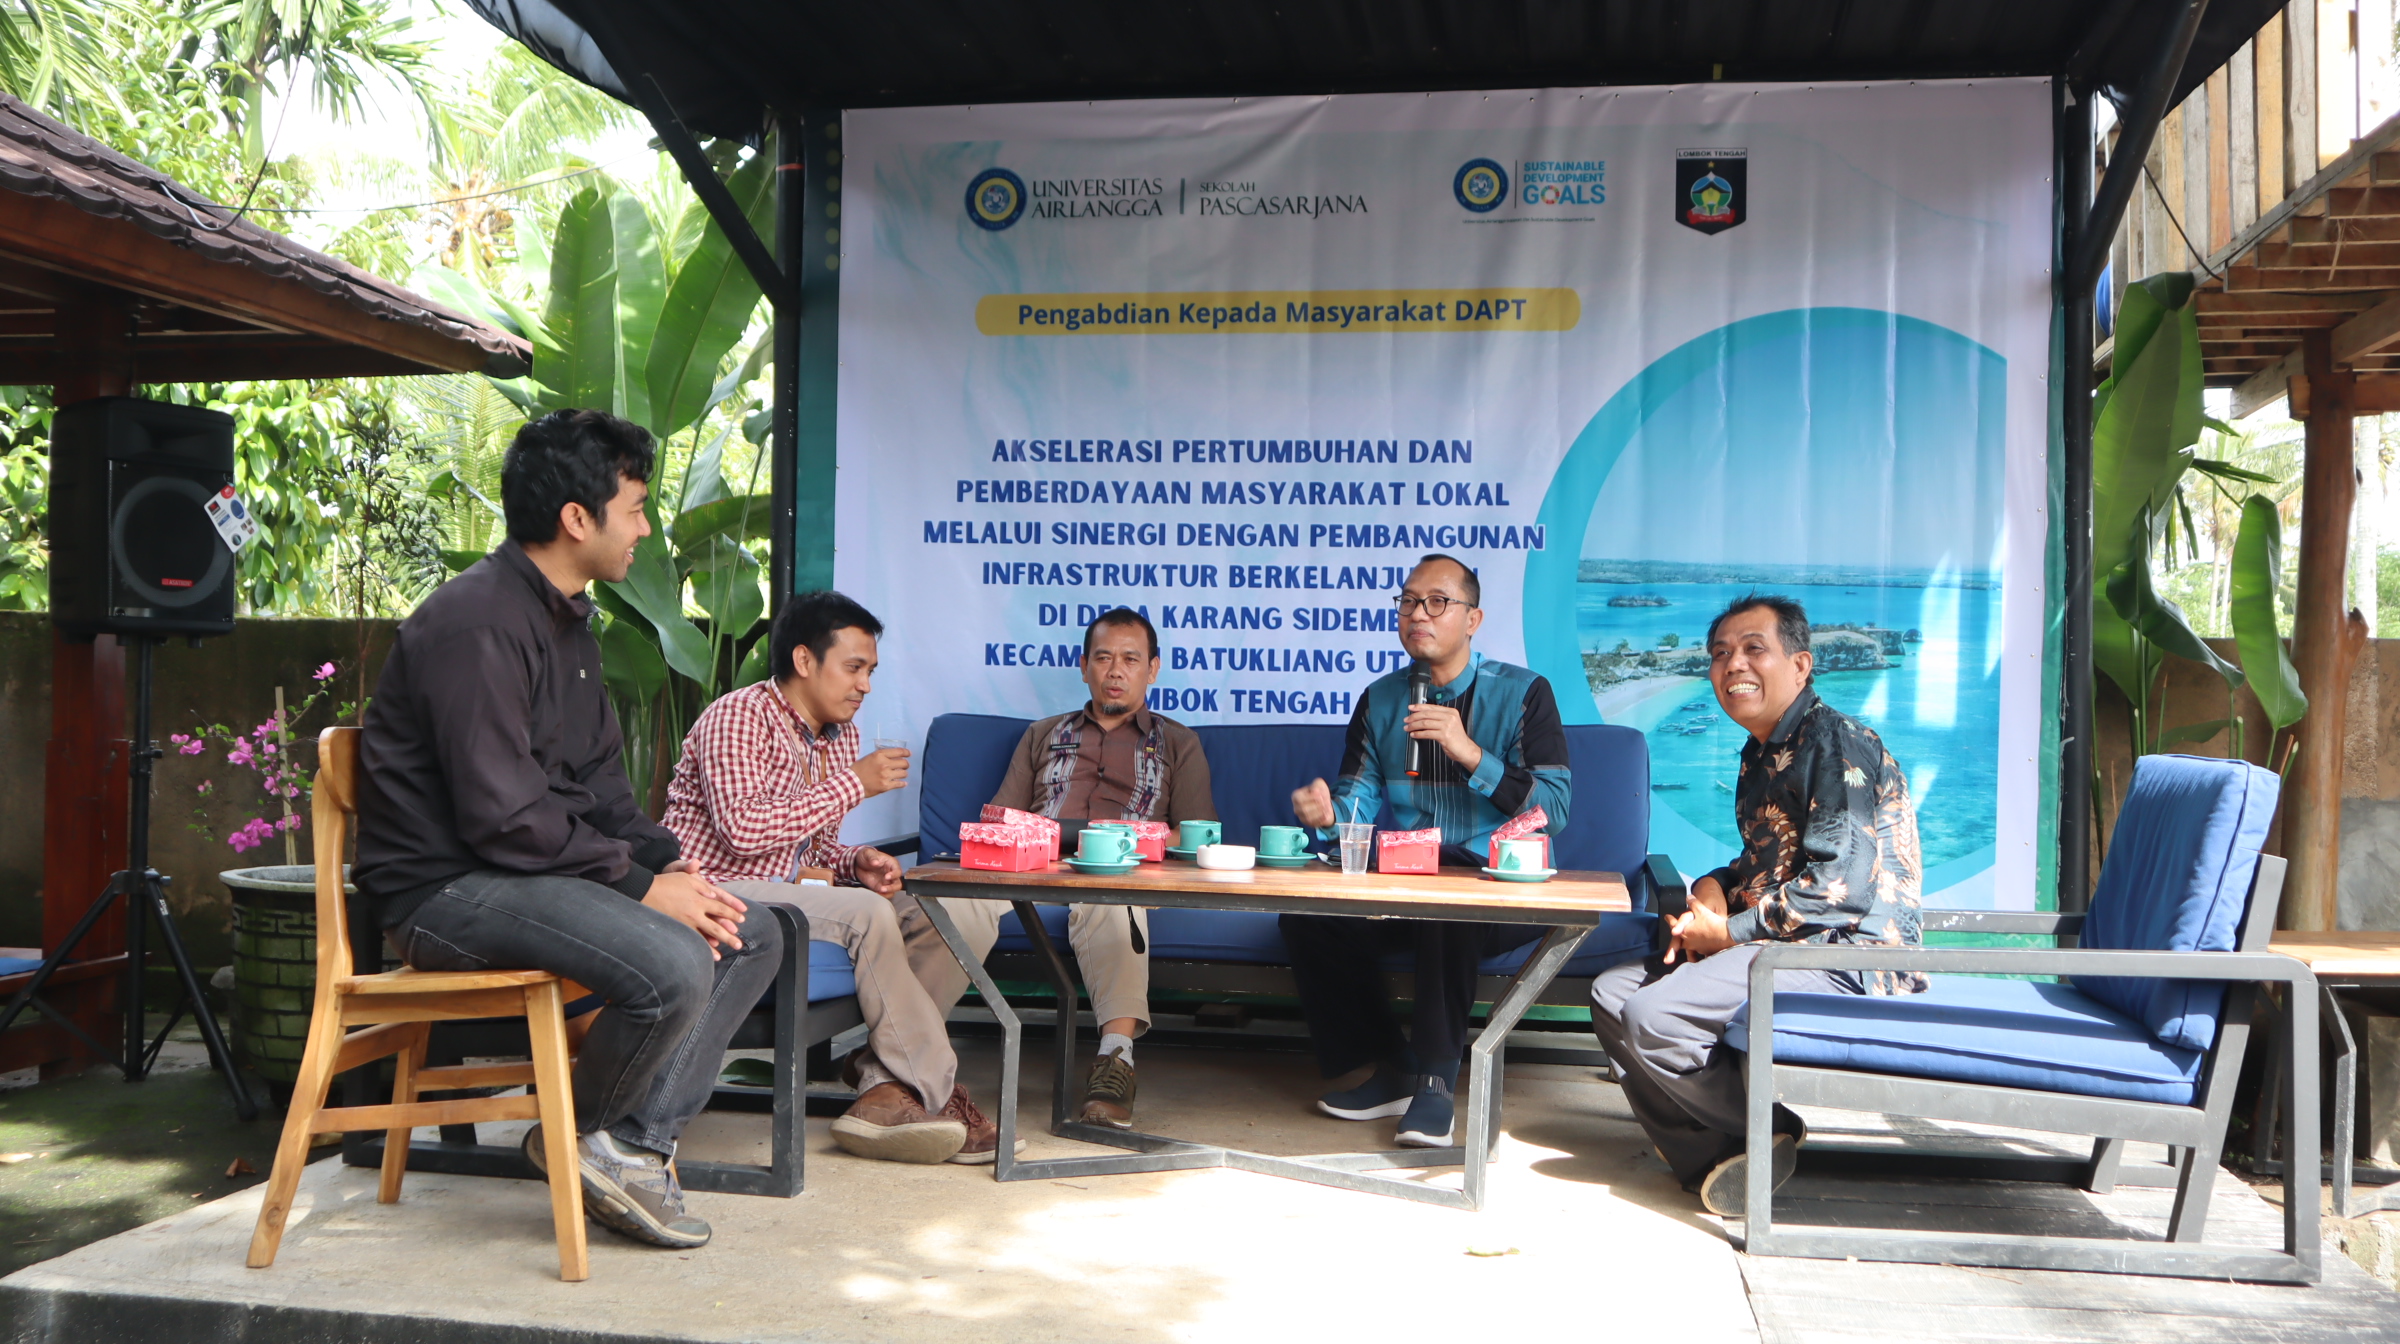 Pengabdian Masyarakat DAPT Unair: Kereta Gantung dan Mimpi Besar Desa Karang Sidemen, Lombok Tengah